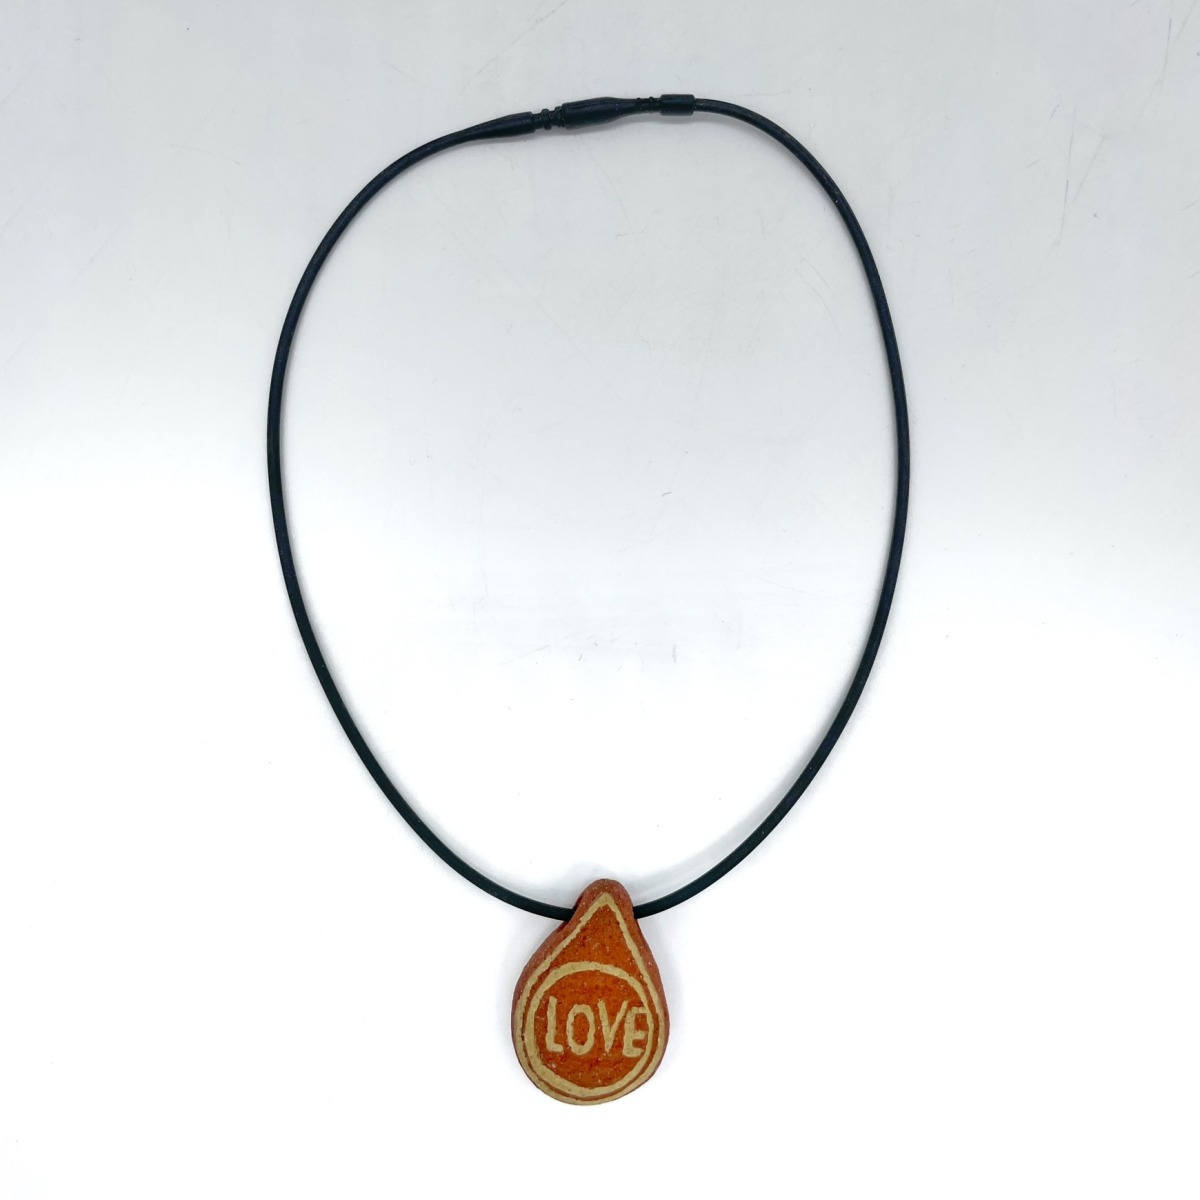 Ceramic "Love" Pendant Necklace, reversible